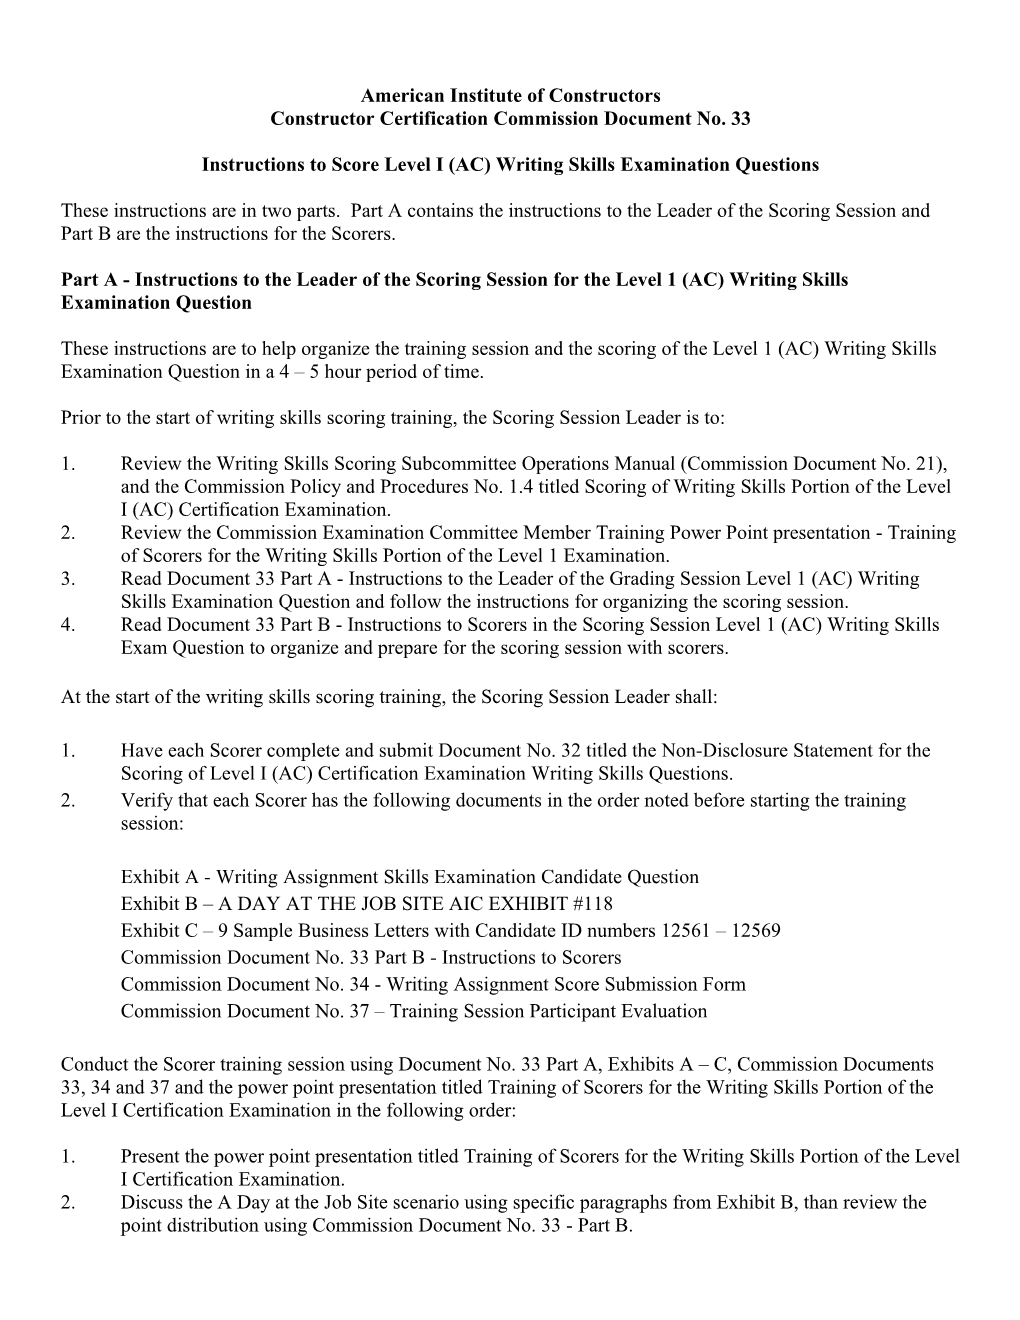 Commission Document No. 33 - Instructions to Score Level 1 (AC) Writing Skills Examination